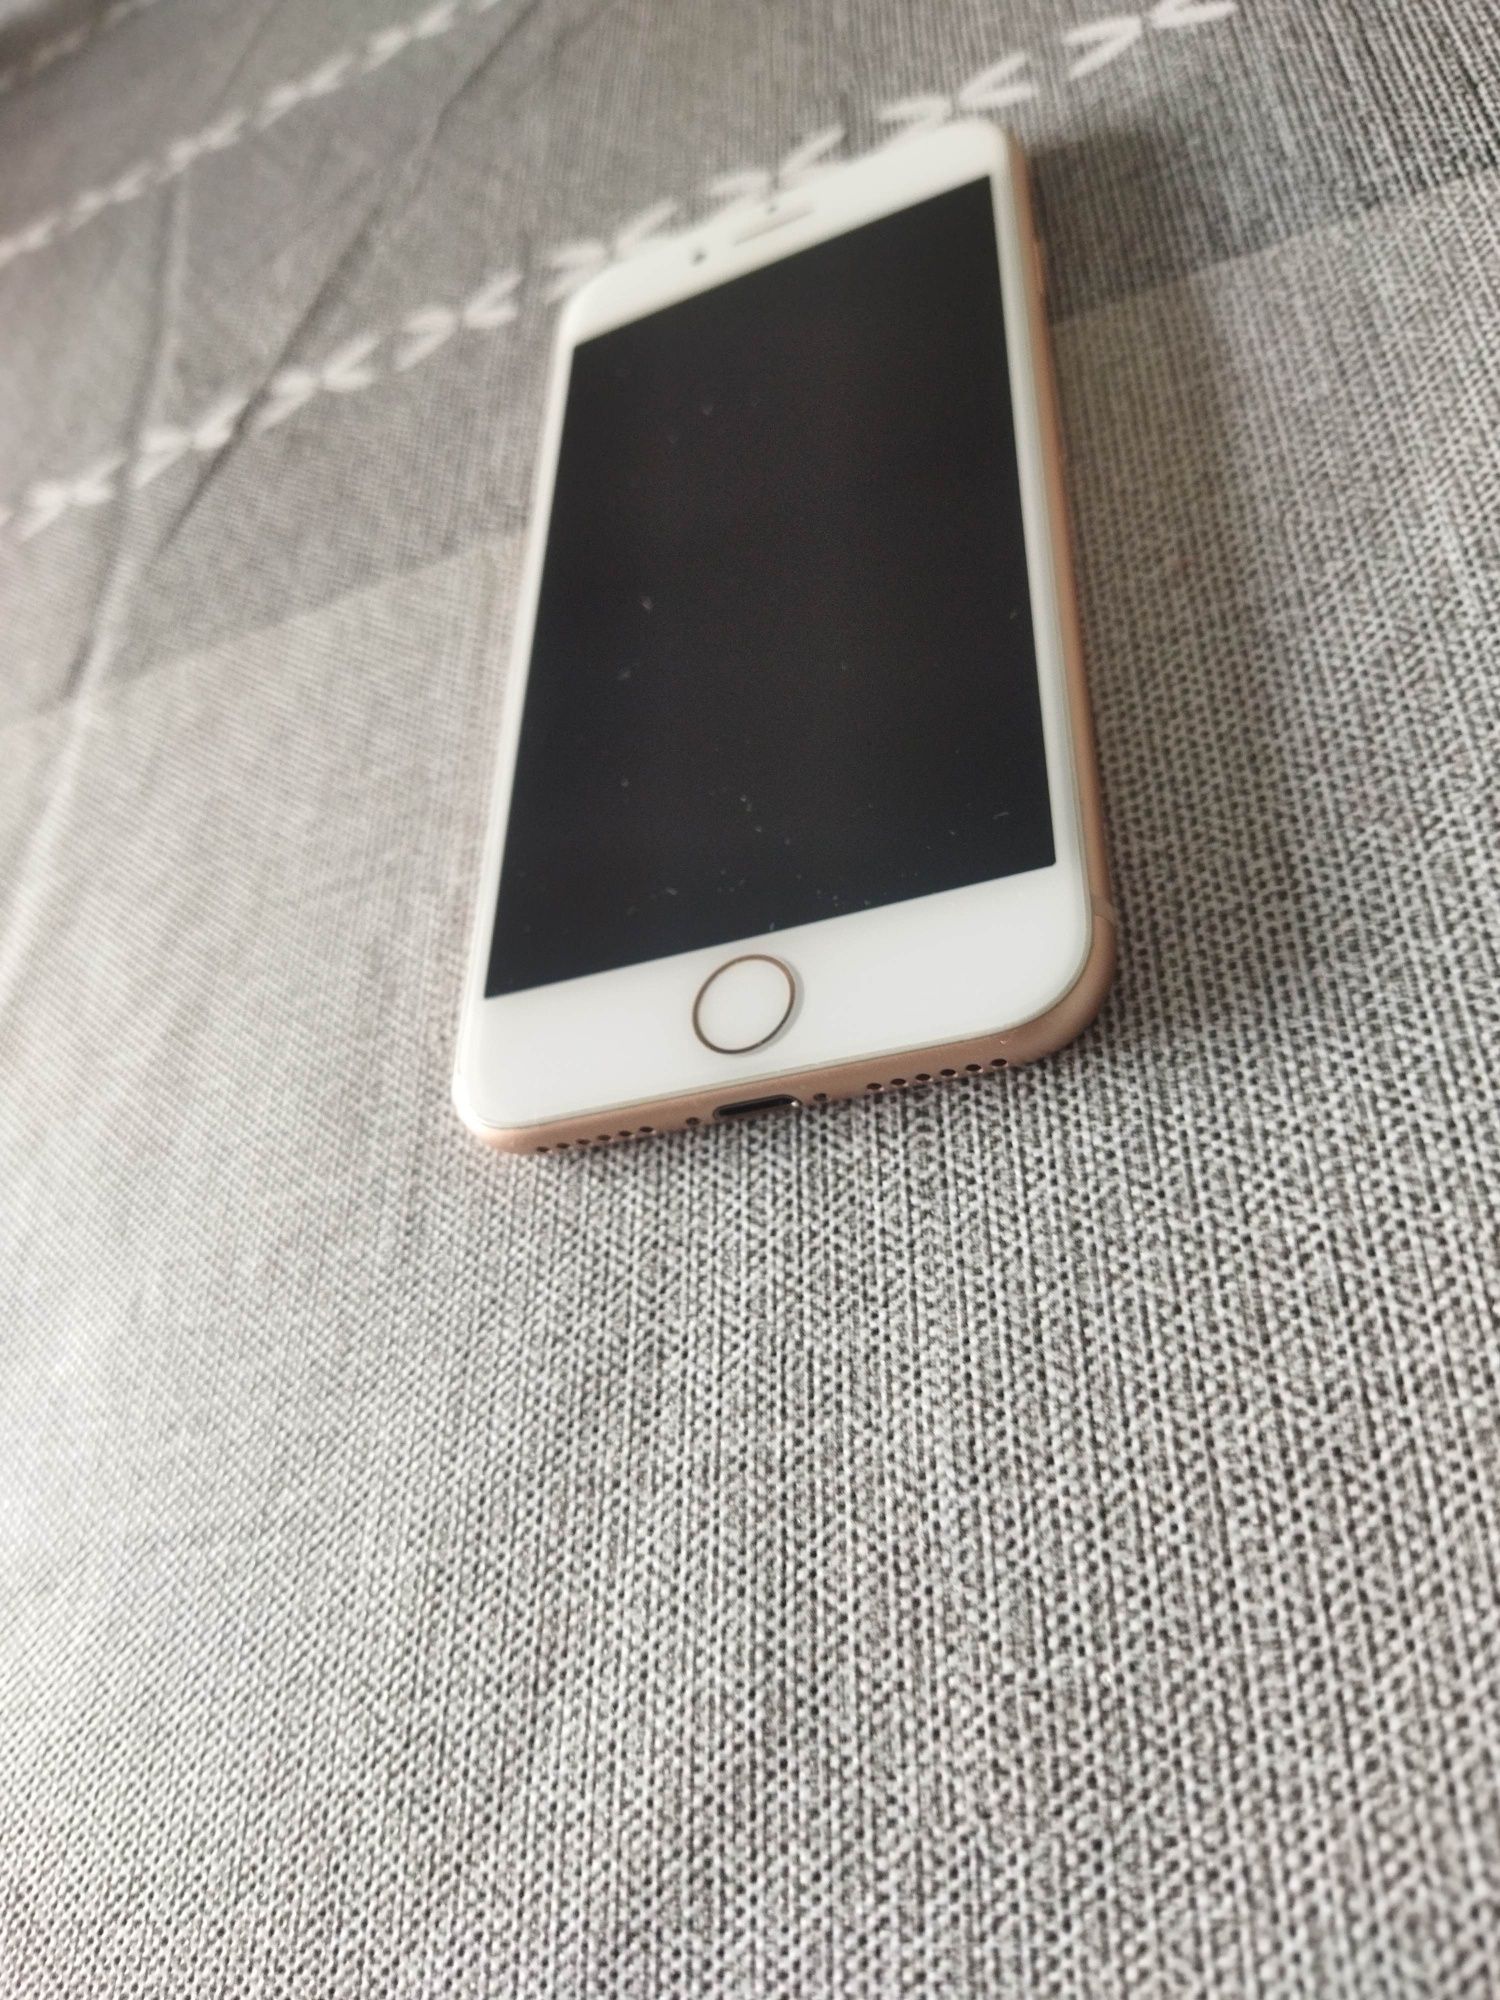 iPhone 8 esteticamente como novo mt estimado, (ler anúncio) Rose gold